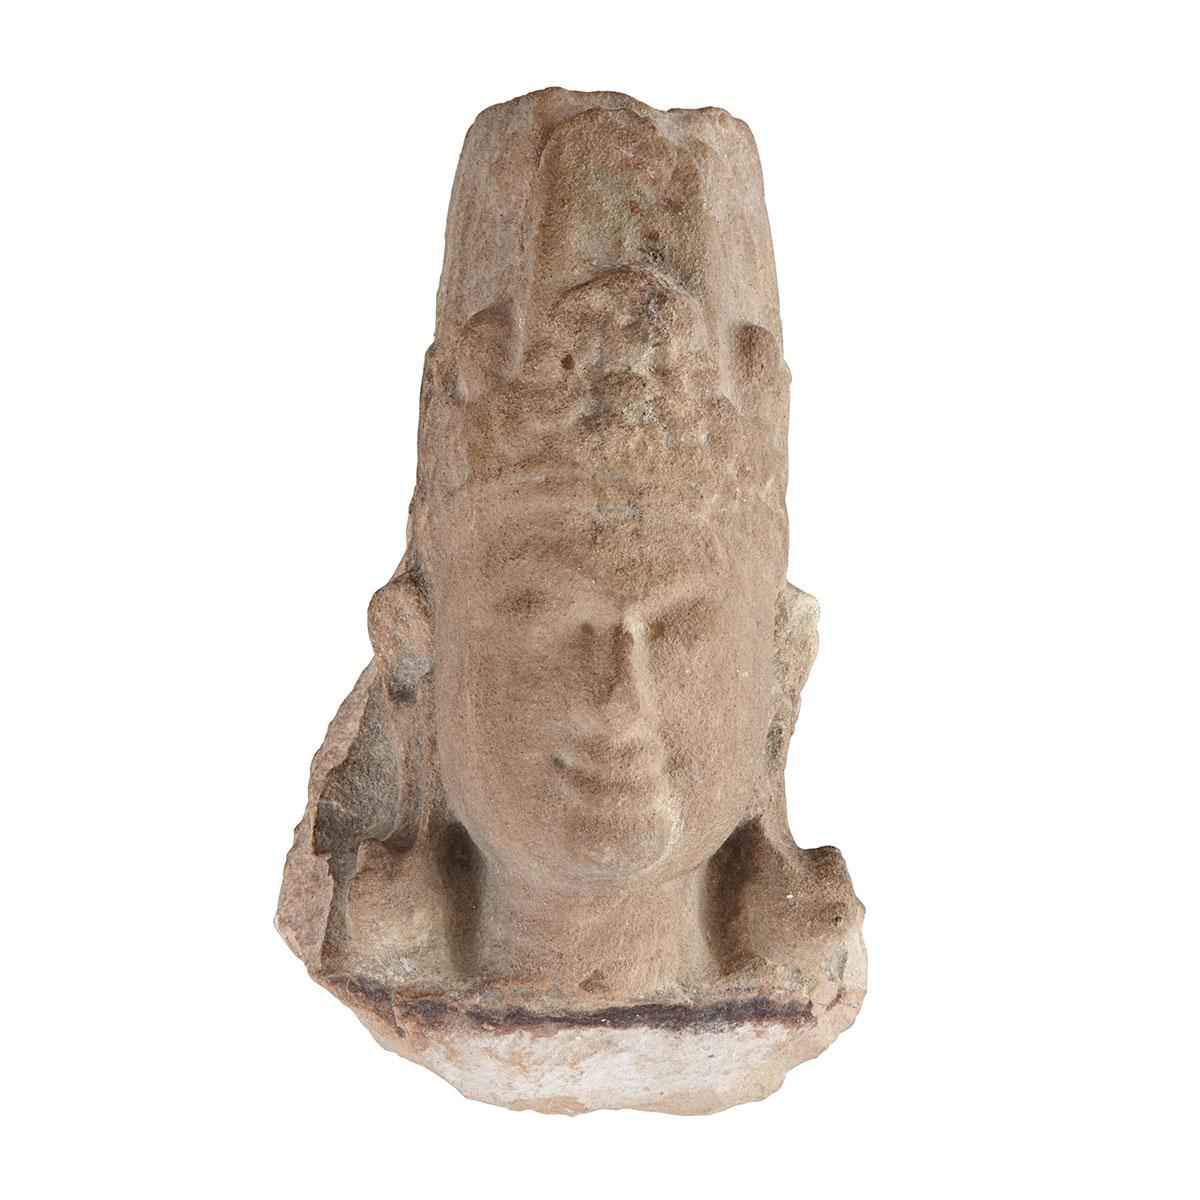 Limestone Carved Head of Vishnu, Central Indian, Possibly Chandella, 12th/13th Century